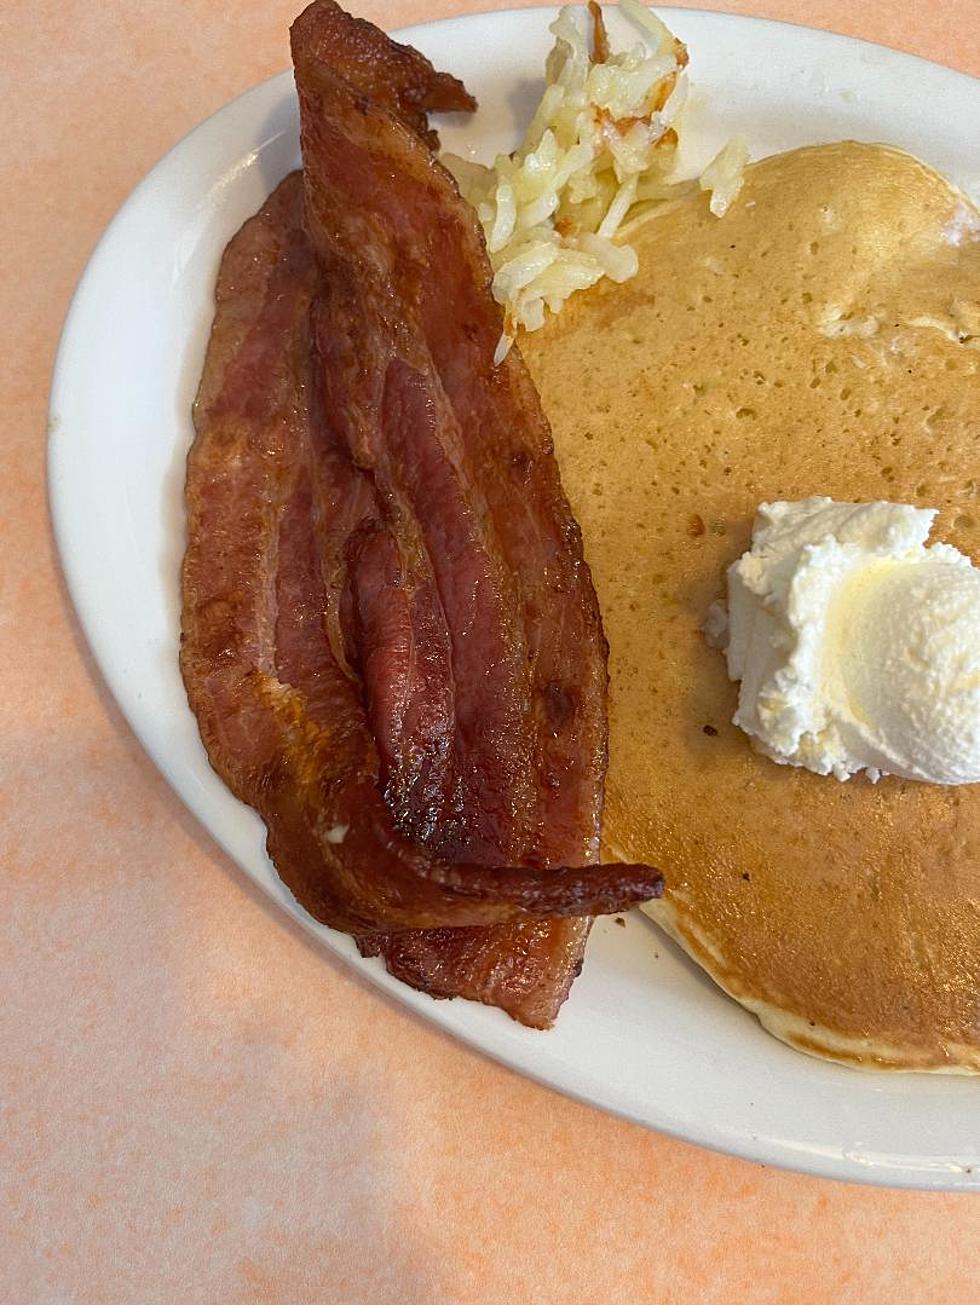 11 Of The Best Breakfast Spots In Western Colorado You Must Visit